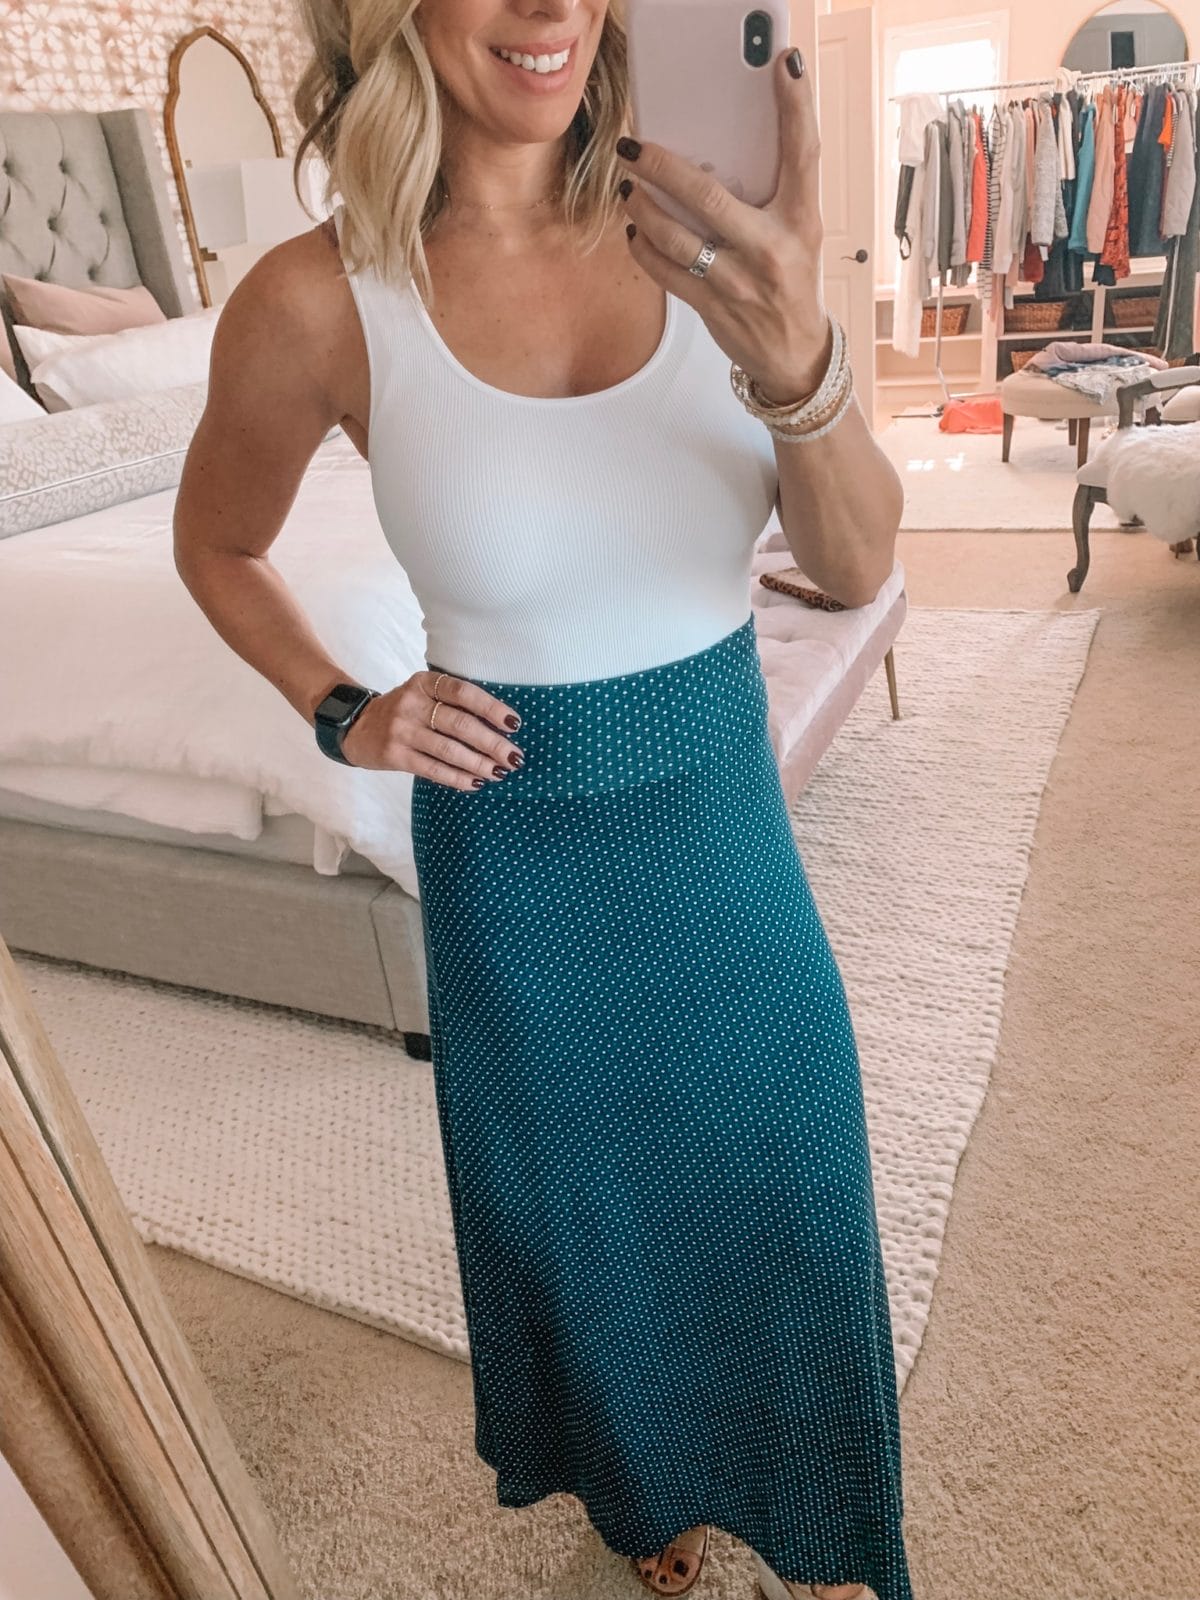 Dressing Room - white tank with a blue polka dot skirt